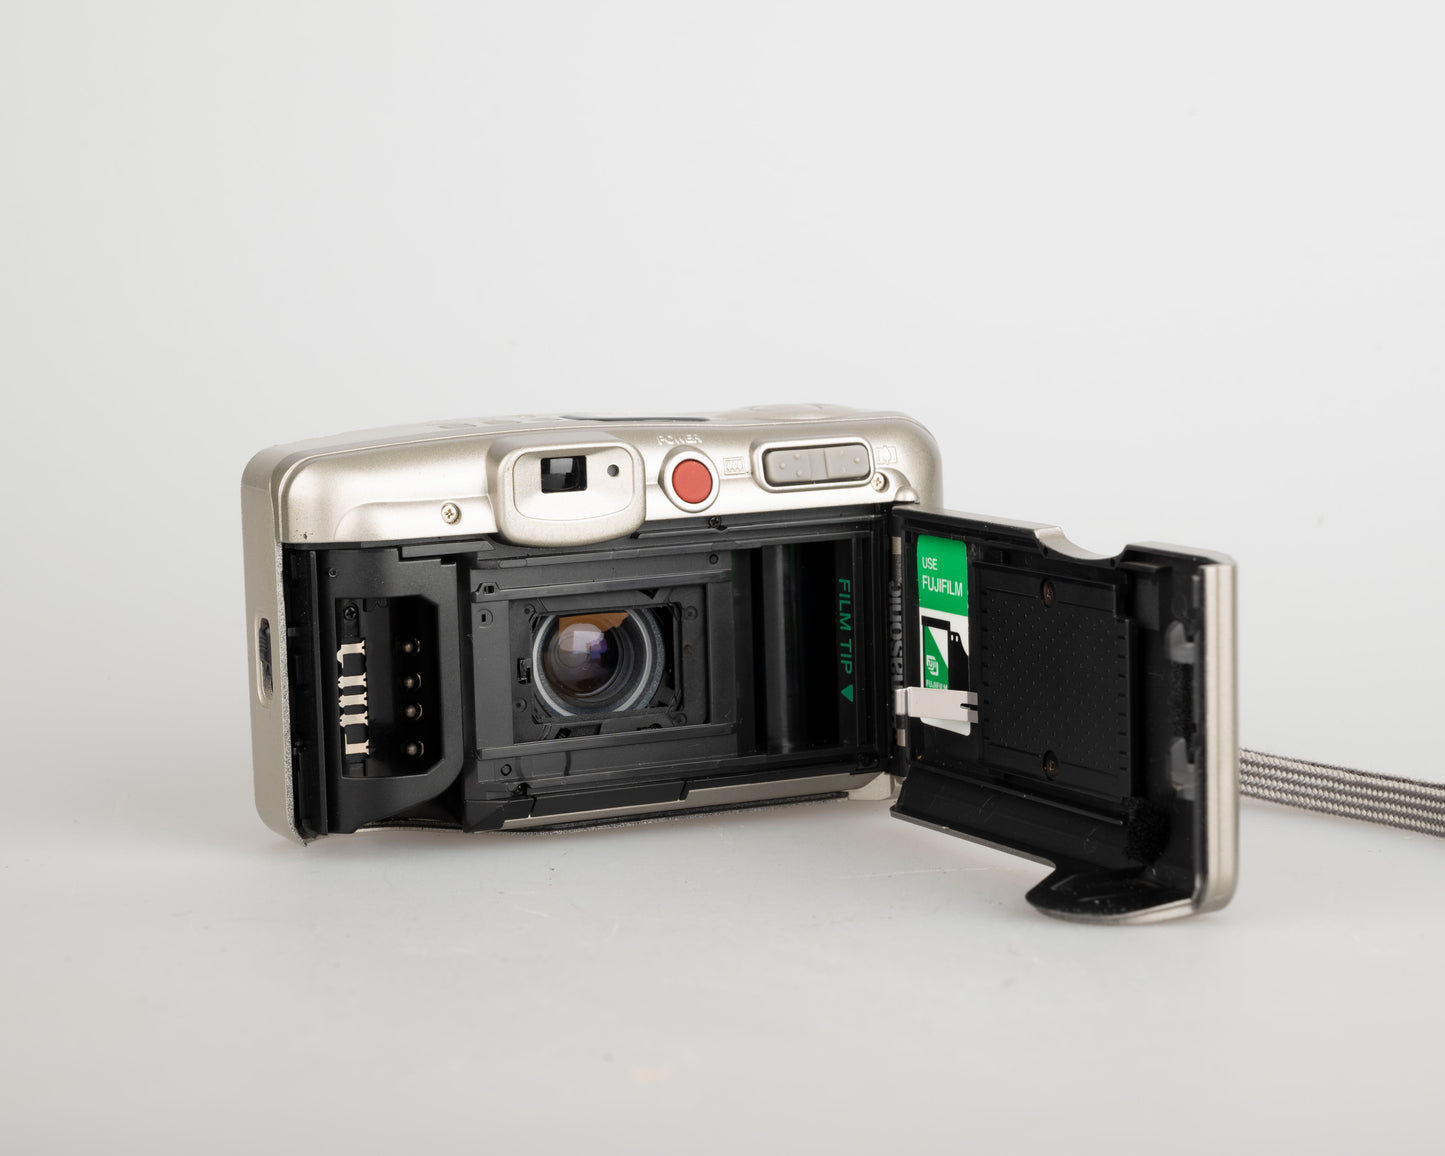 Fujifilm Discovery S1200 Zoom Date w/ case + manual